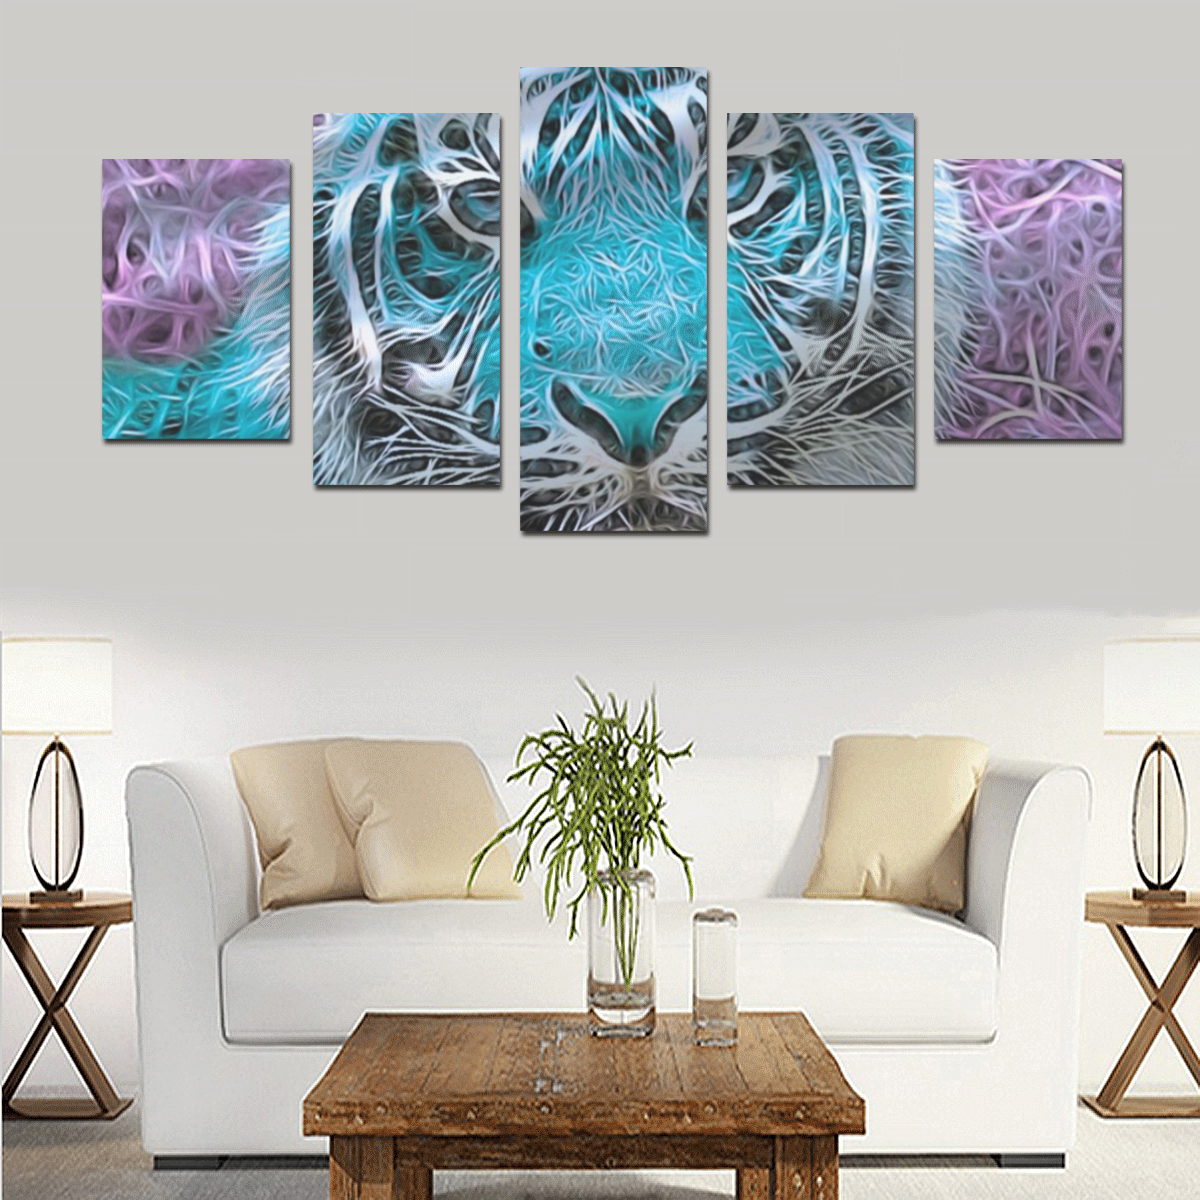 Crazy blue tiger by JamColors Canvas Print Sets D (No Frame)